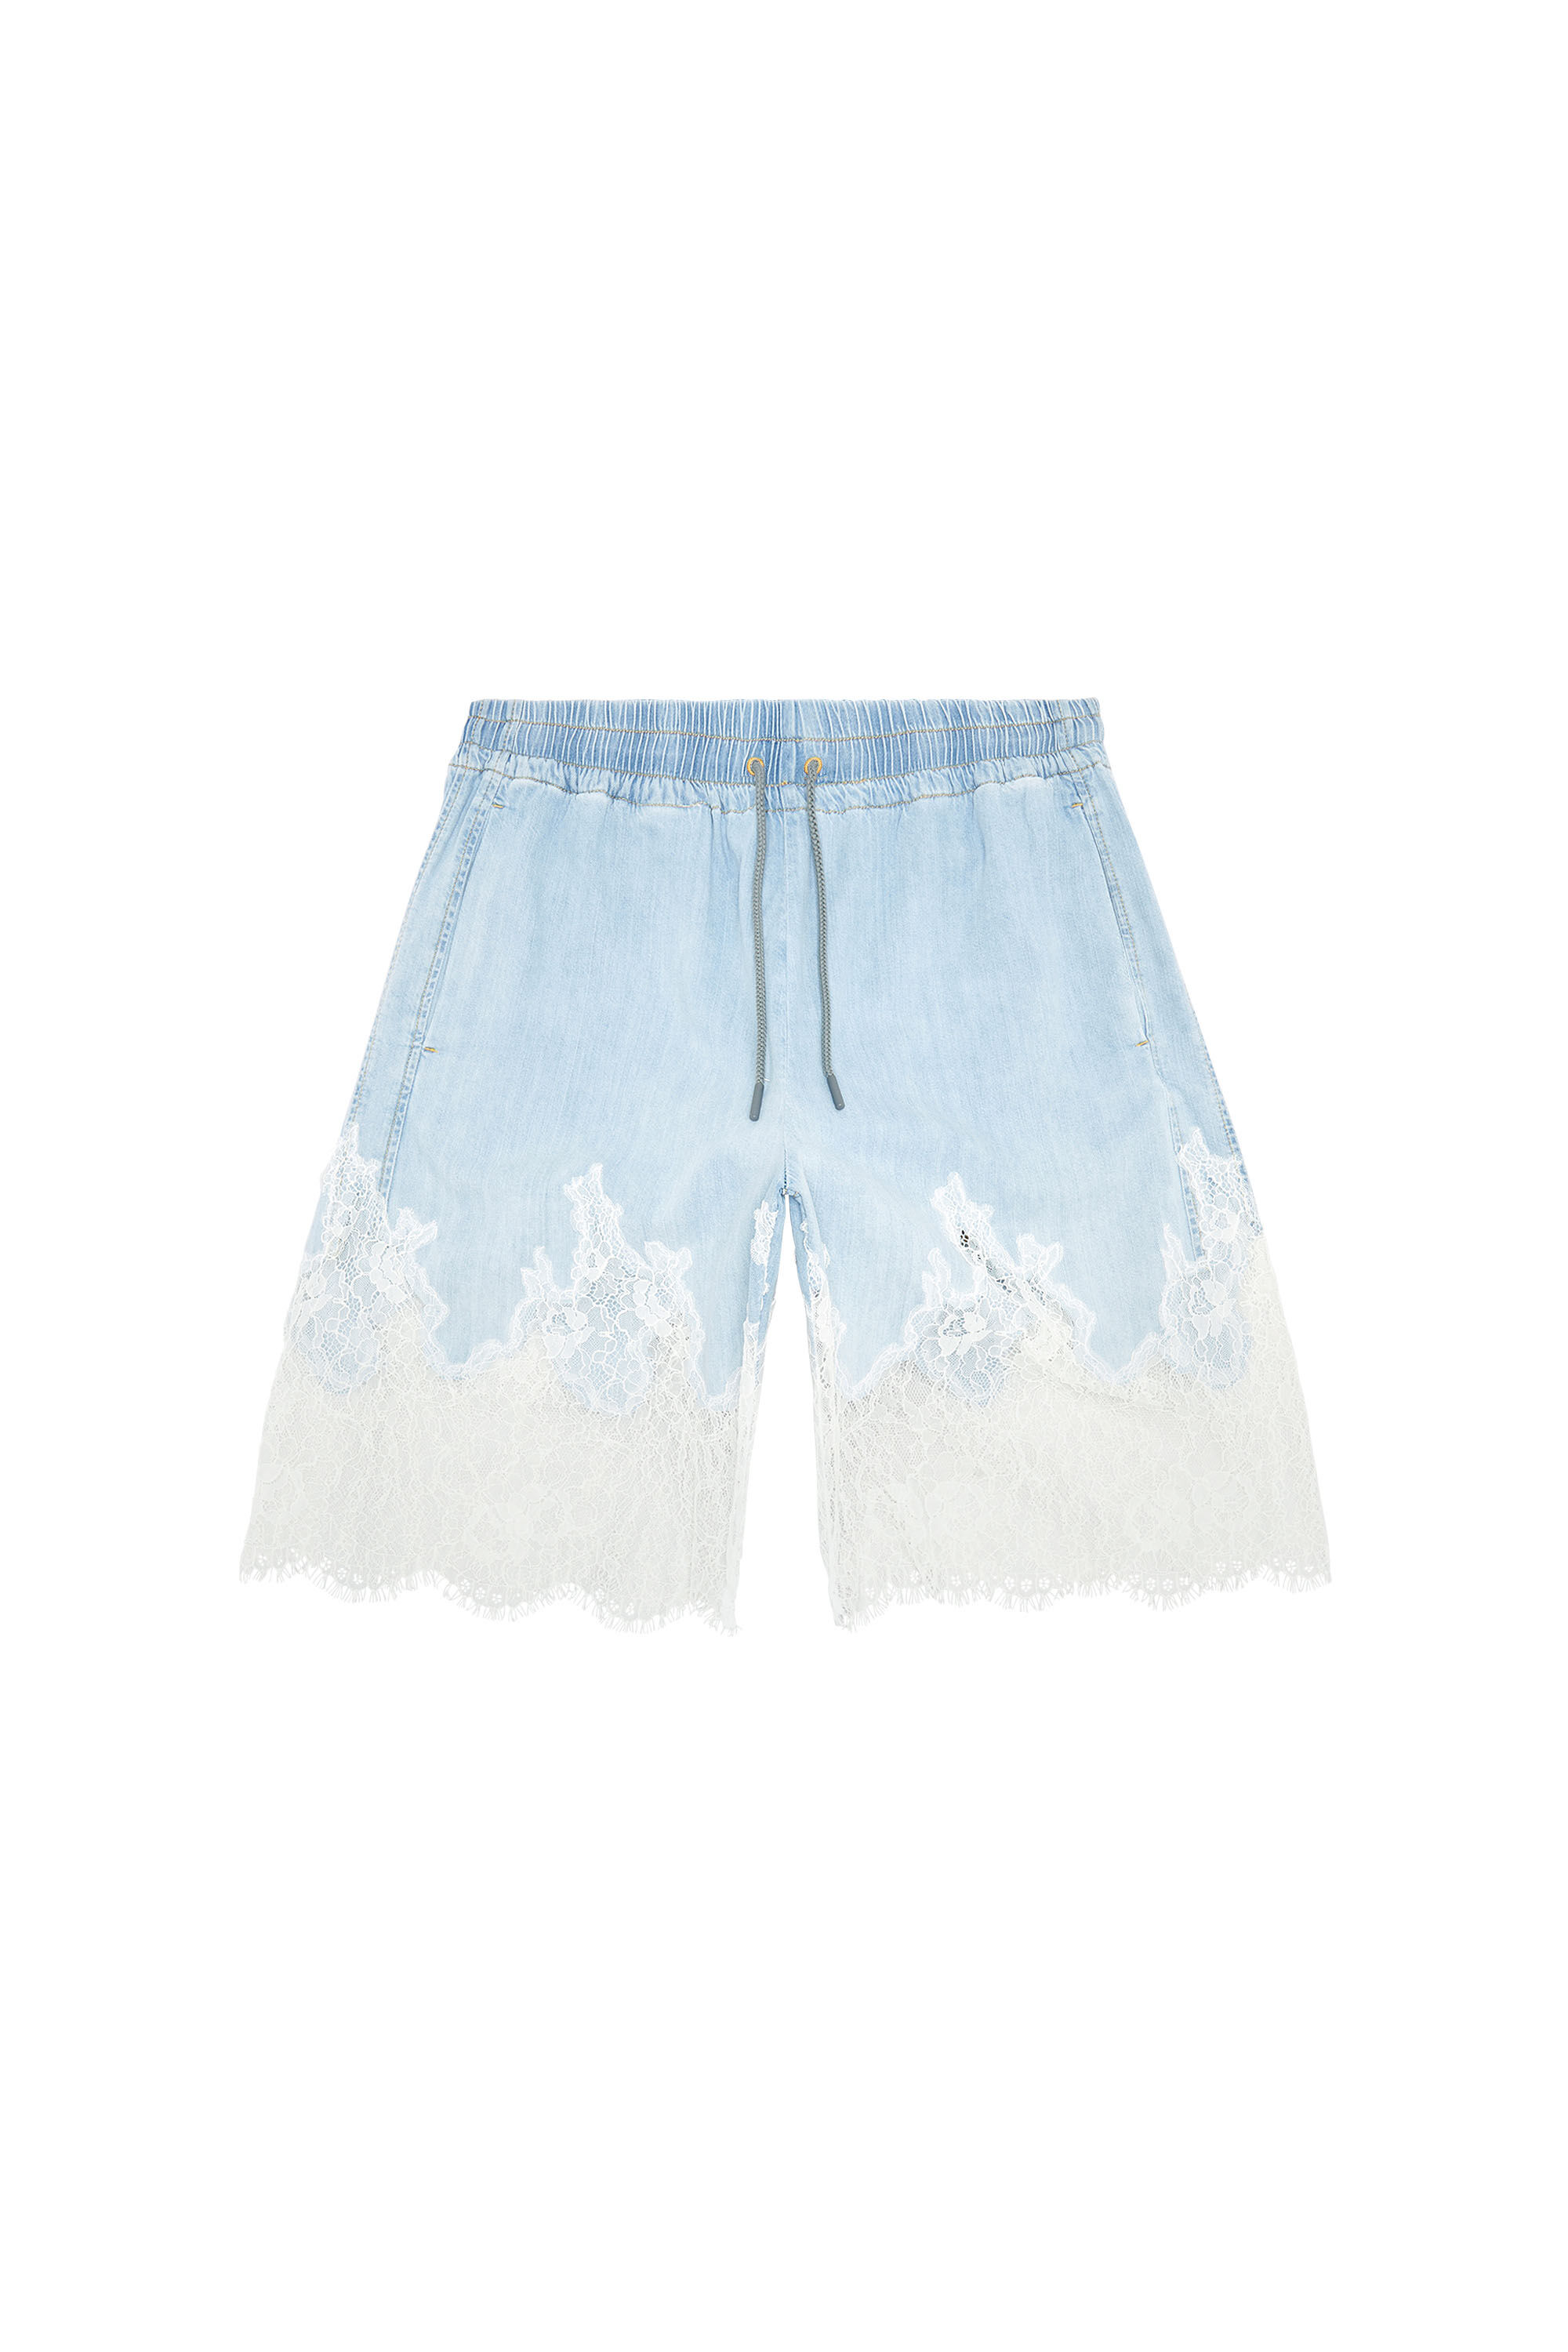 Diesel - DE-MALKIA-S, Female Bermuda shorts in denim and lace in ブルー - Image 2